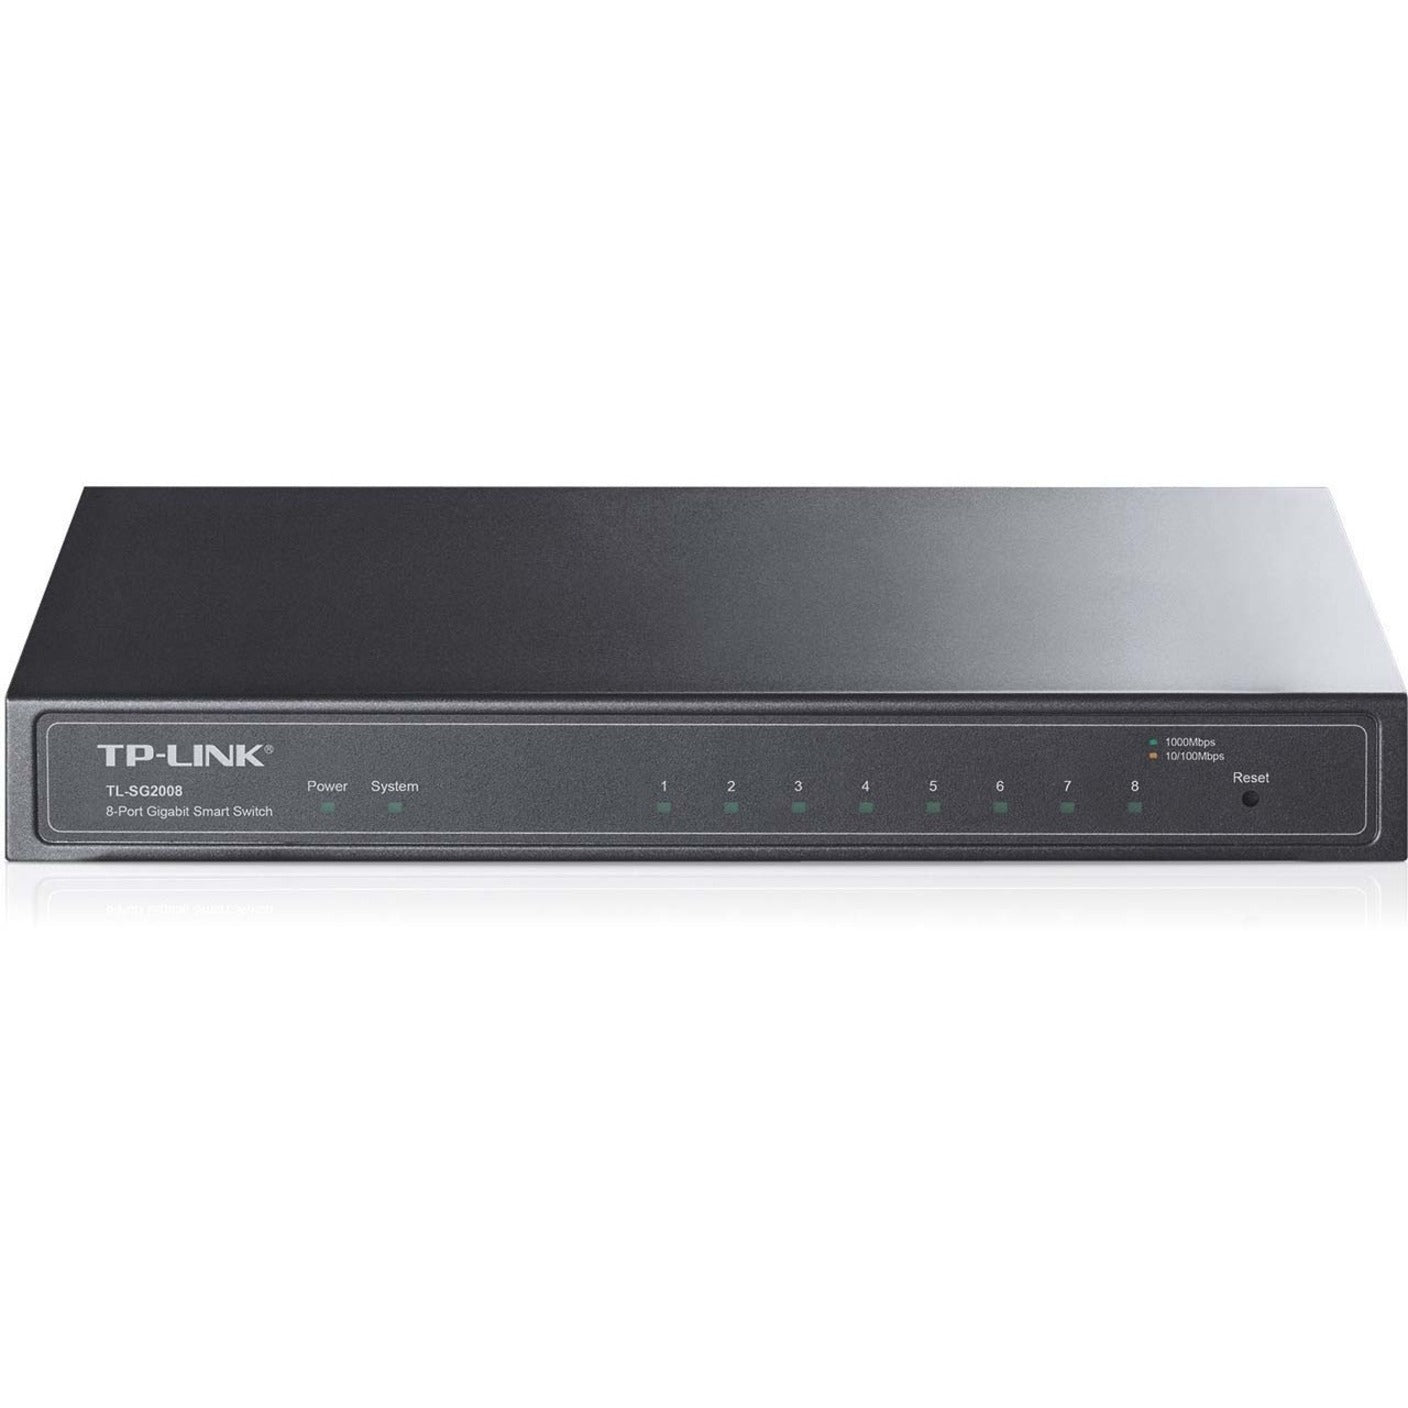 TP-Link TL-SG2008 8-ポート ギガビット スマート スイッチ、高速かつ信頼性のある接続のための使いやすいネットワーク スイッチ TP-Linkを翻訳：TP-リンク